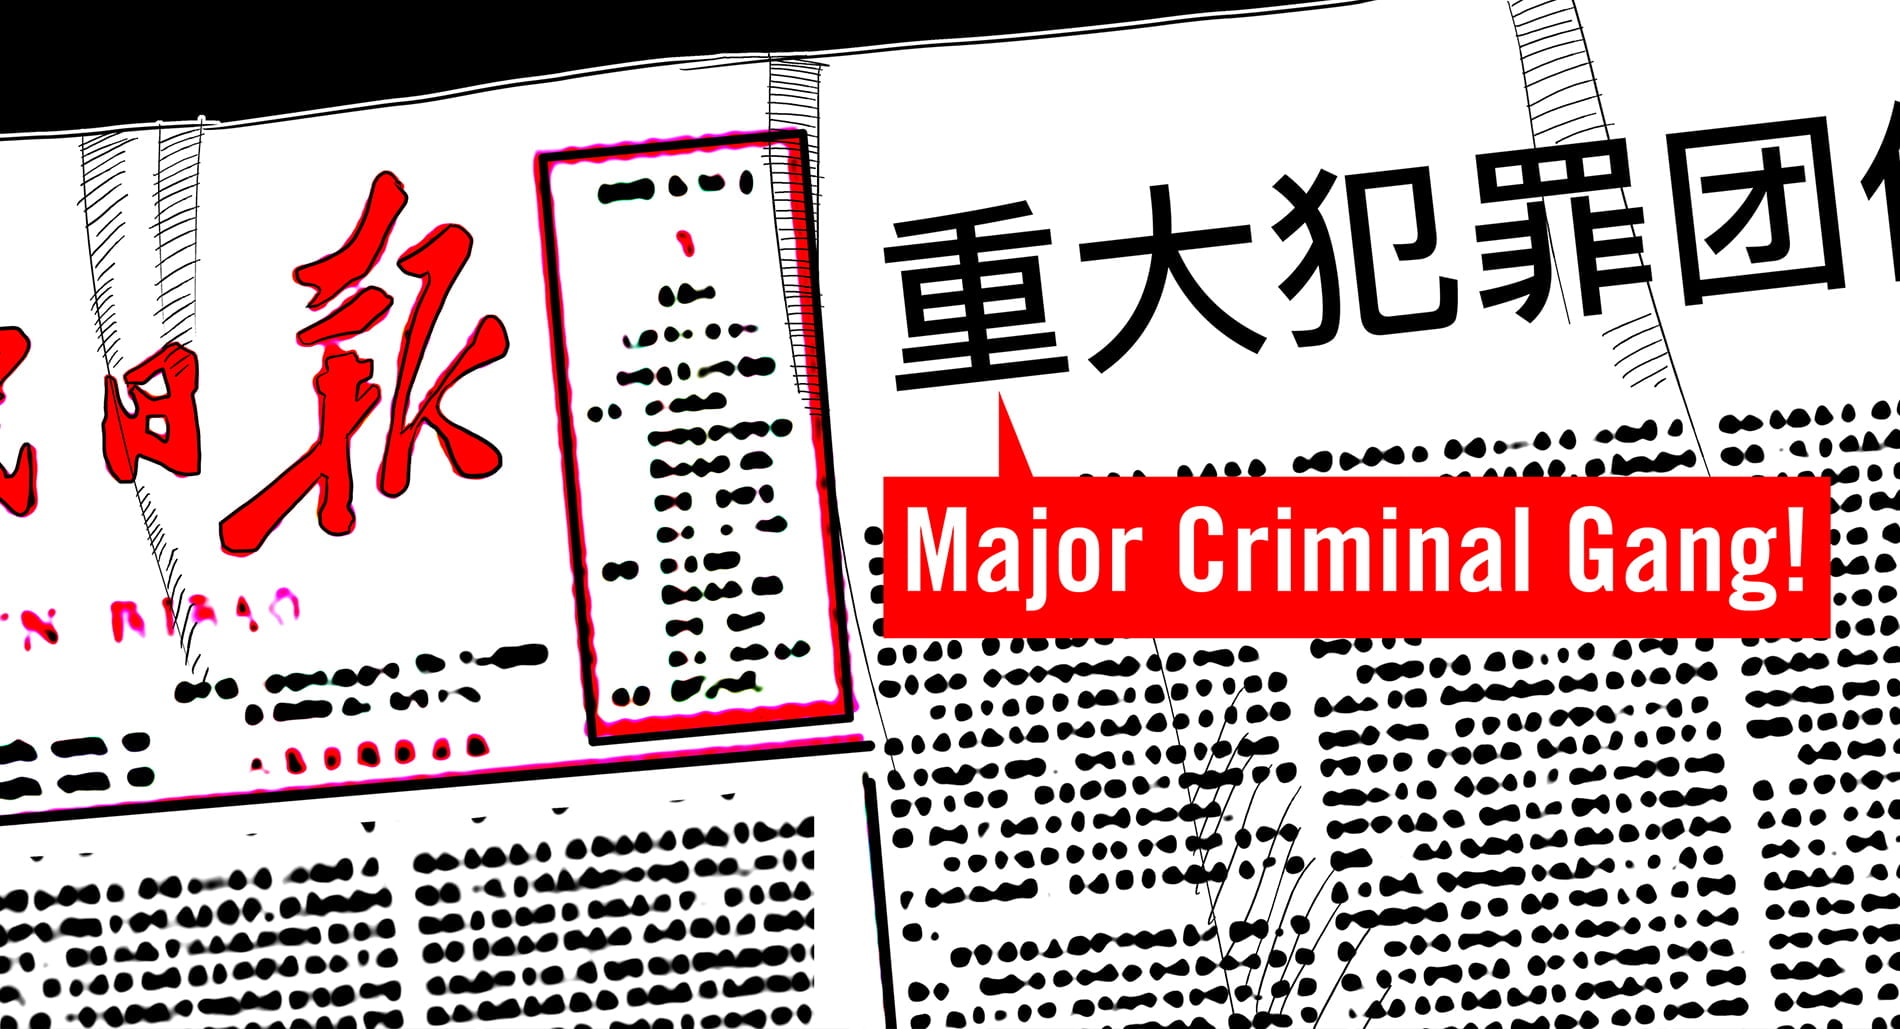 Illustration of Chinese newspaper headline: "Major criminal gang!"